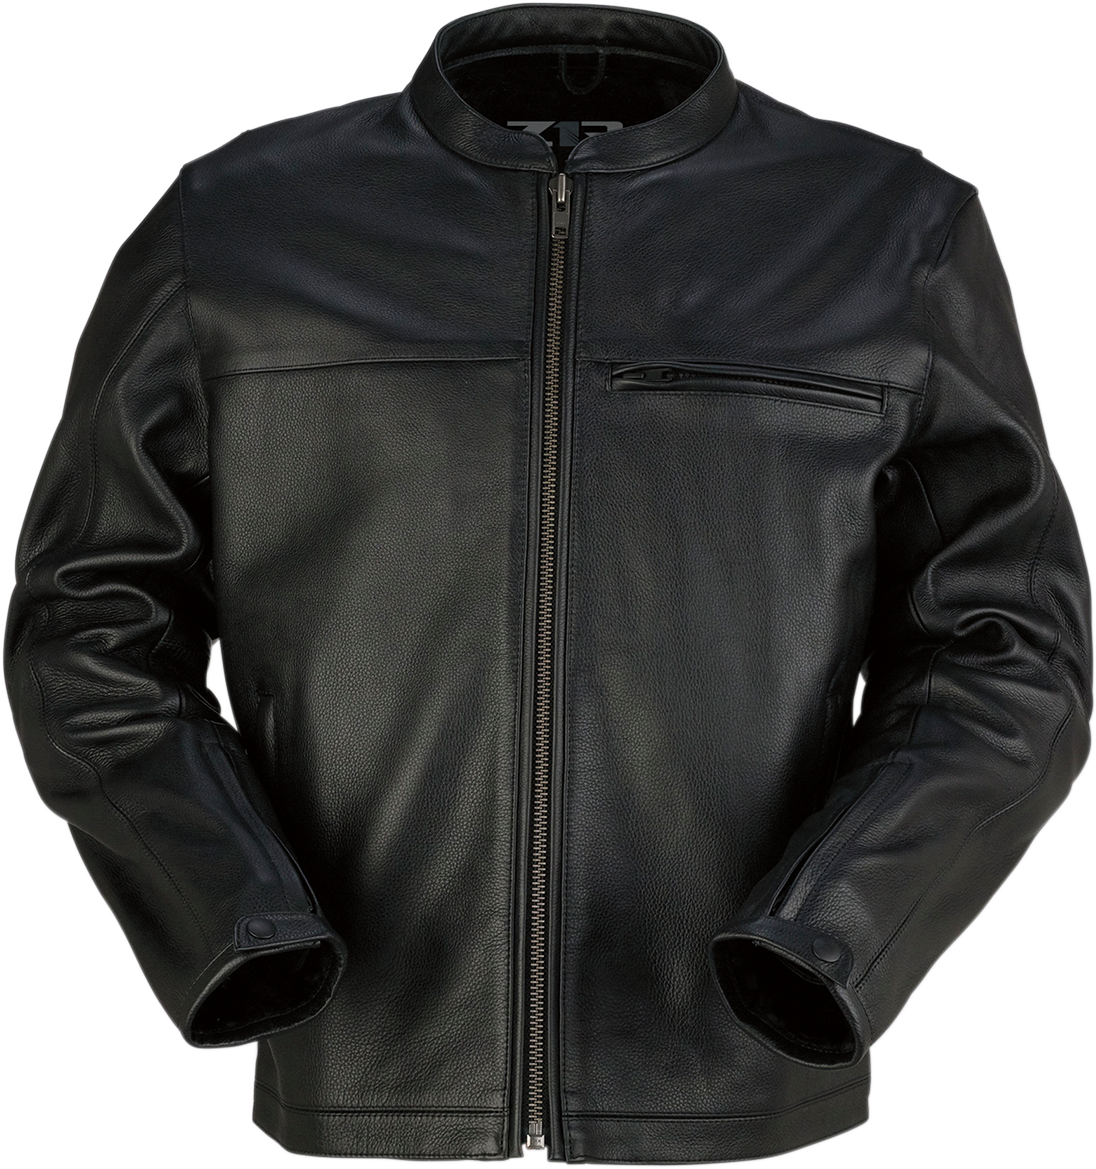 Z1R Munition Leather Jacket - Black - Small 2810-3481